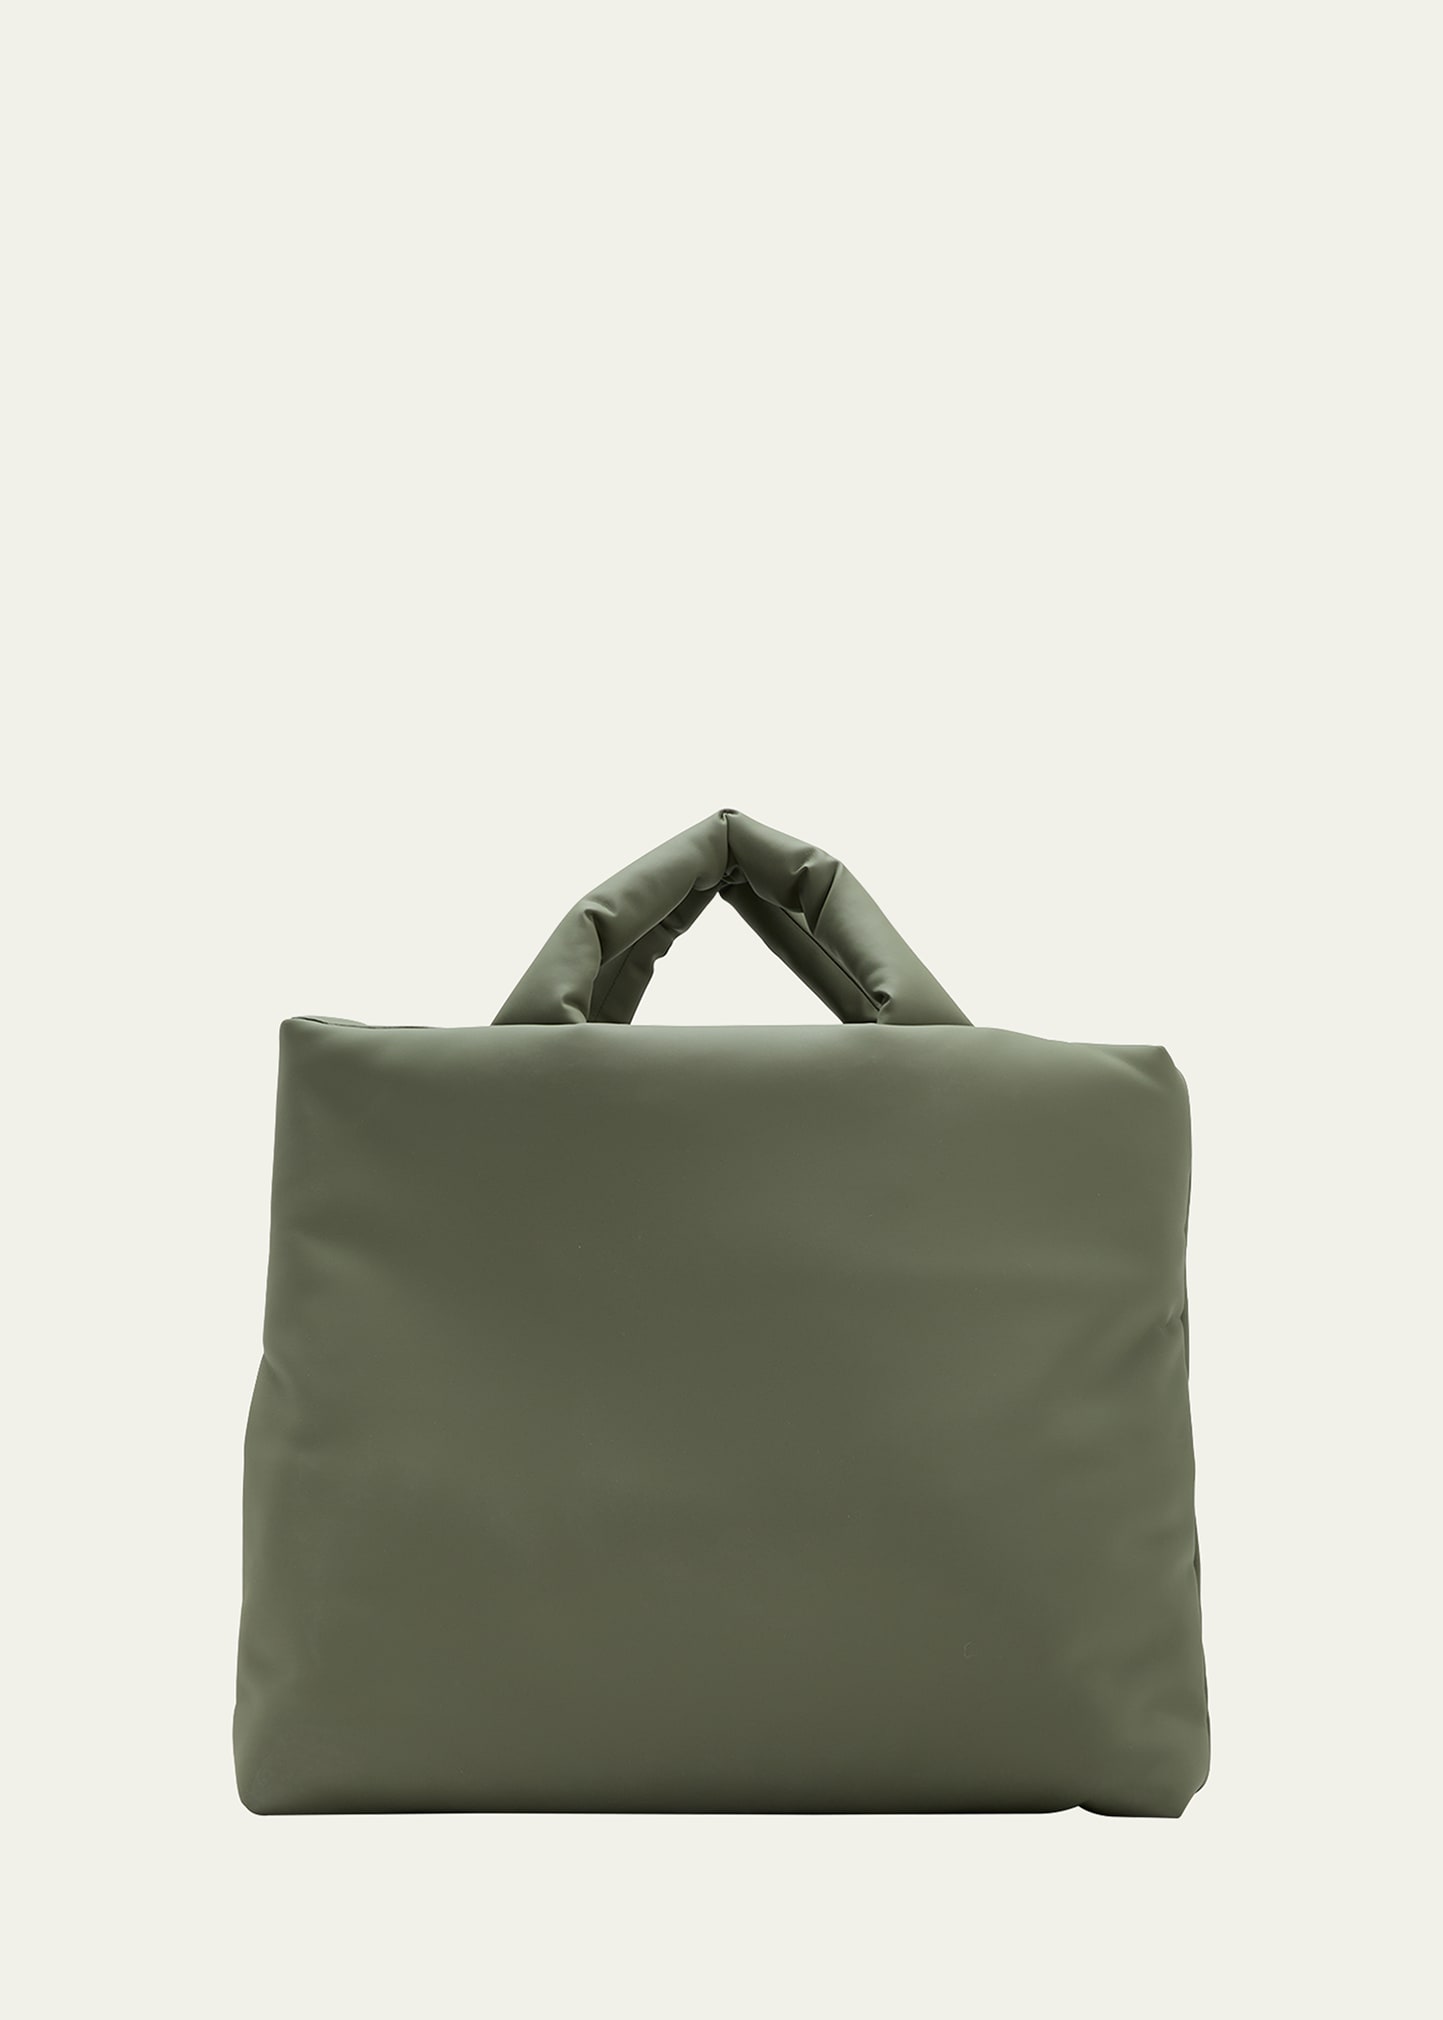 Kassl Pillow Large Tote Bag In Khaki 0070